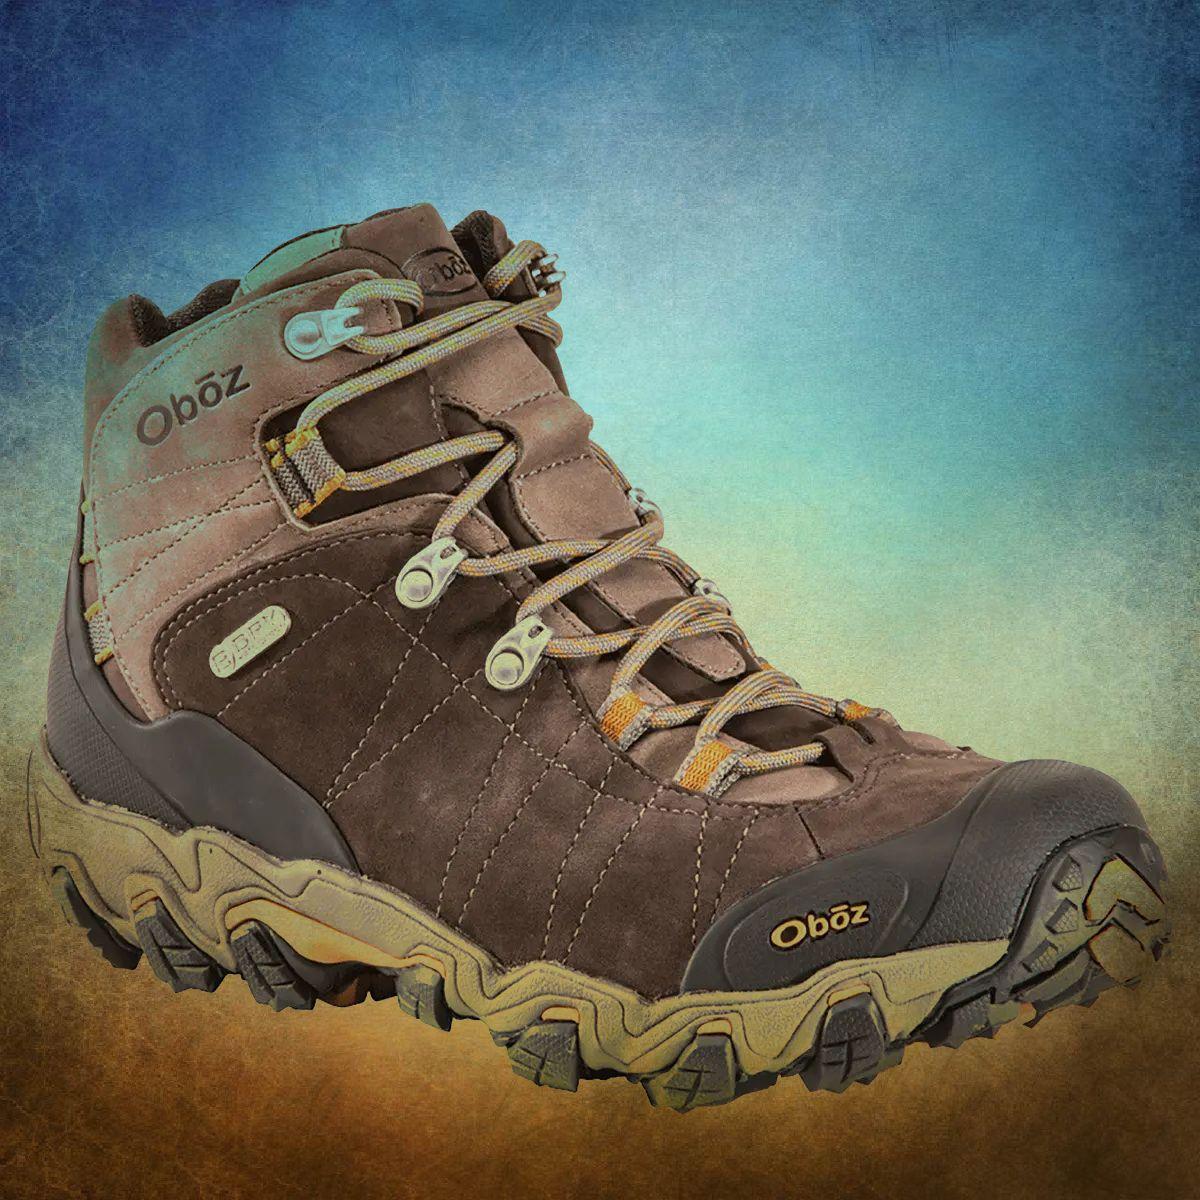 Oboz Men's Bridger Mid B-Dry Hiking Boots, Wide - Size 8.5